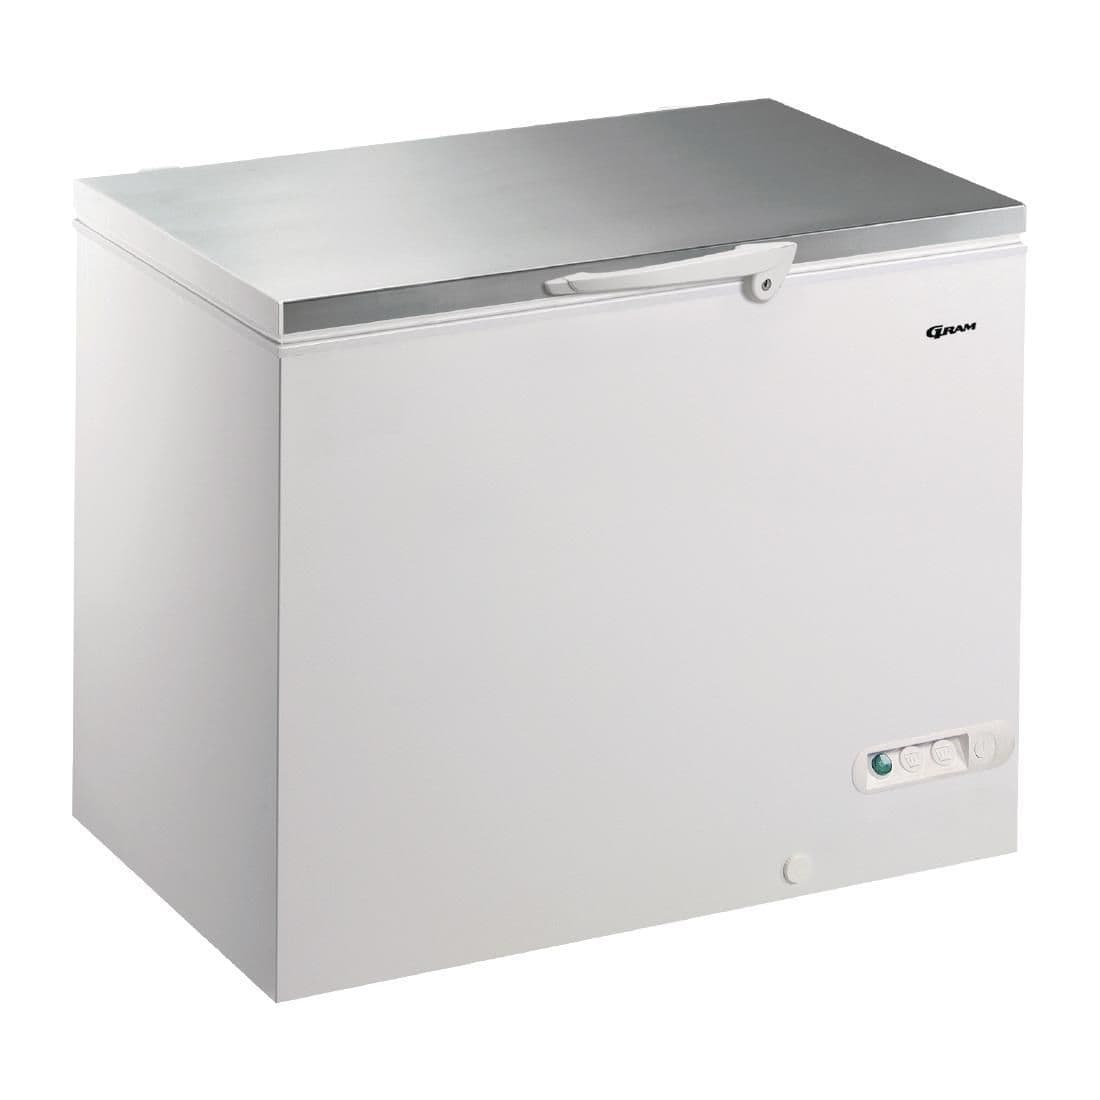 G971 Gram 347Ltr Chest Freezer CF 35 S JD Catering Equipment Solutions Ltd